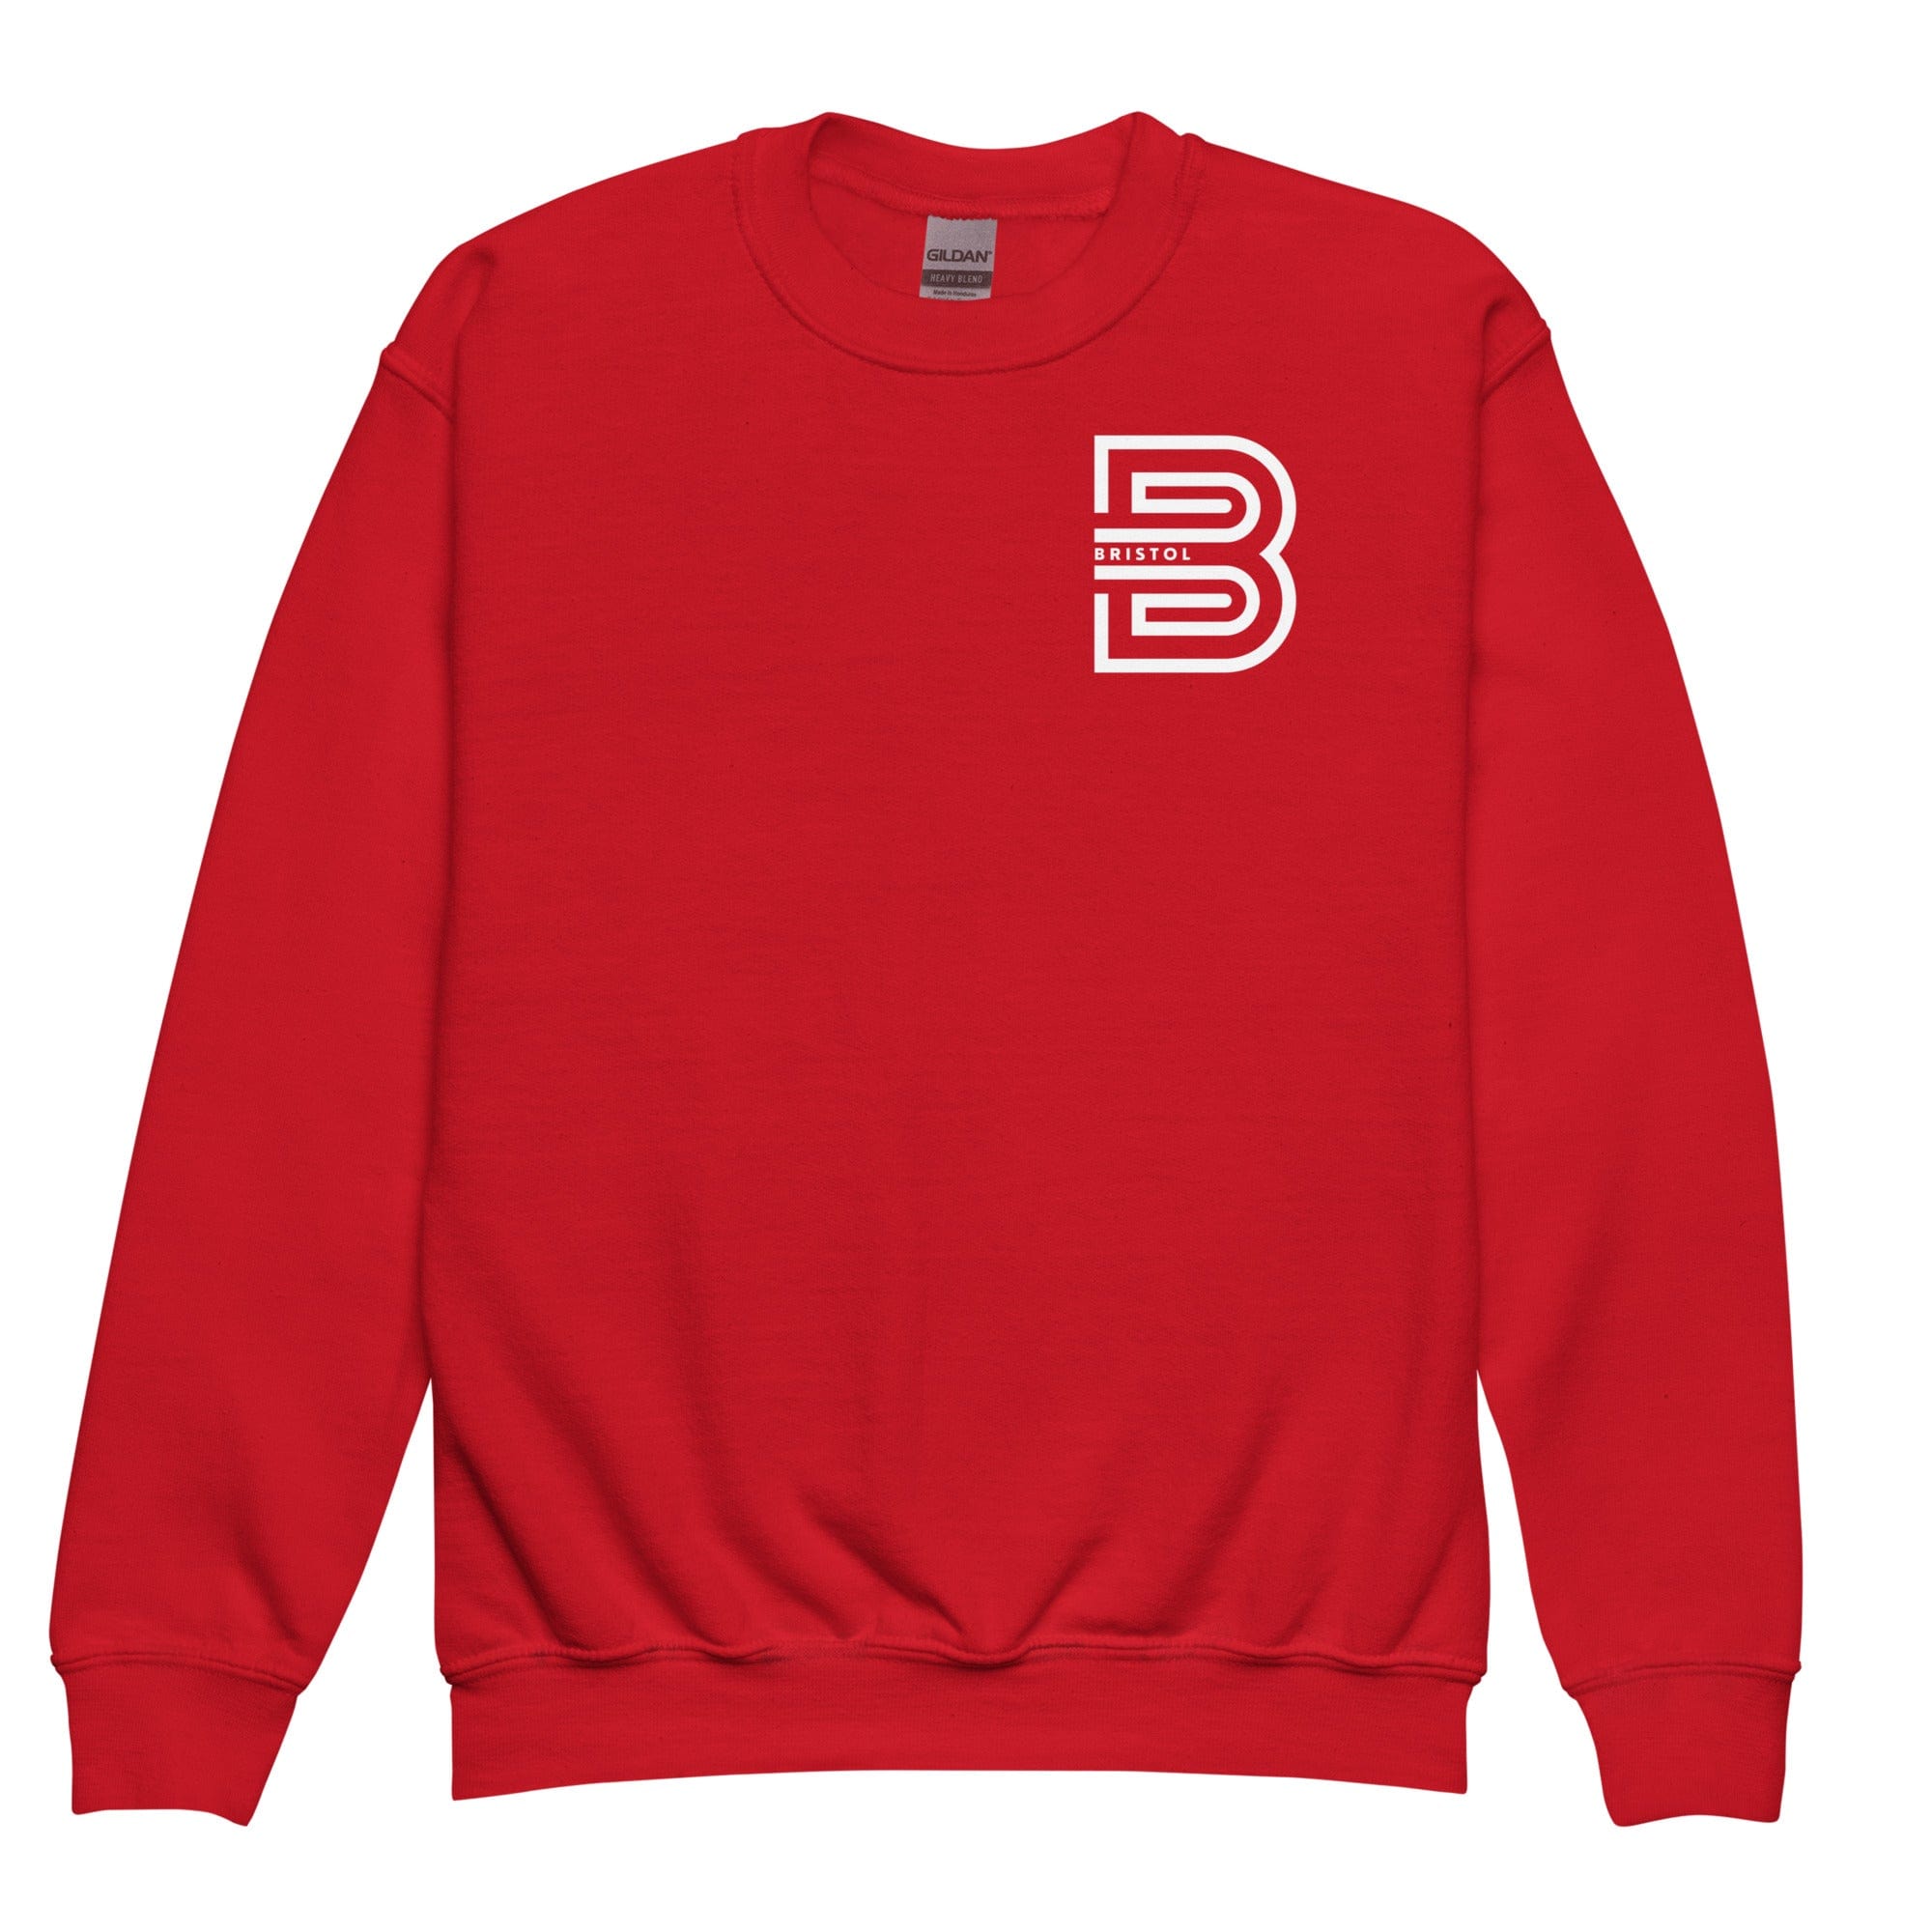 Bristol B Youth Crewneck Sweatshirt Red / XS youth sweatshirts Jolly & Goode